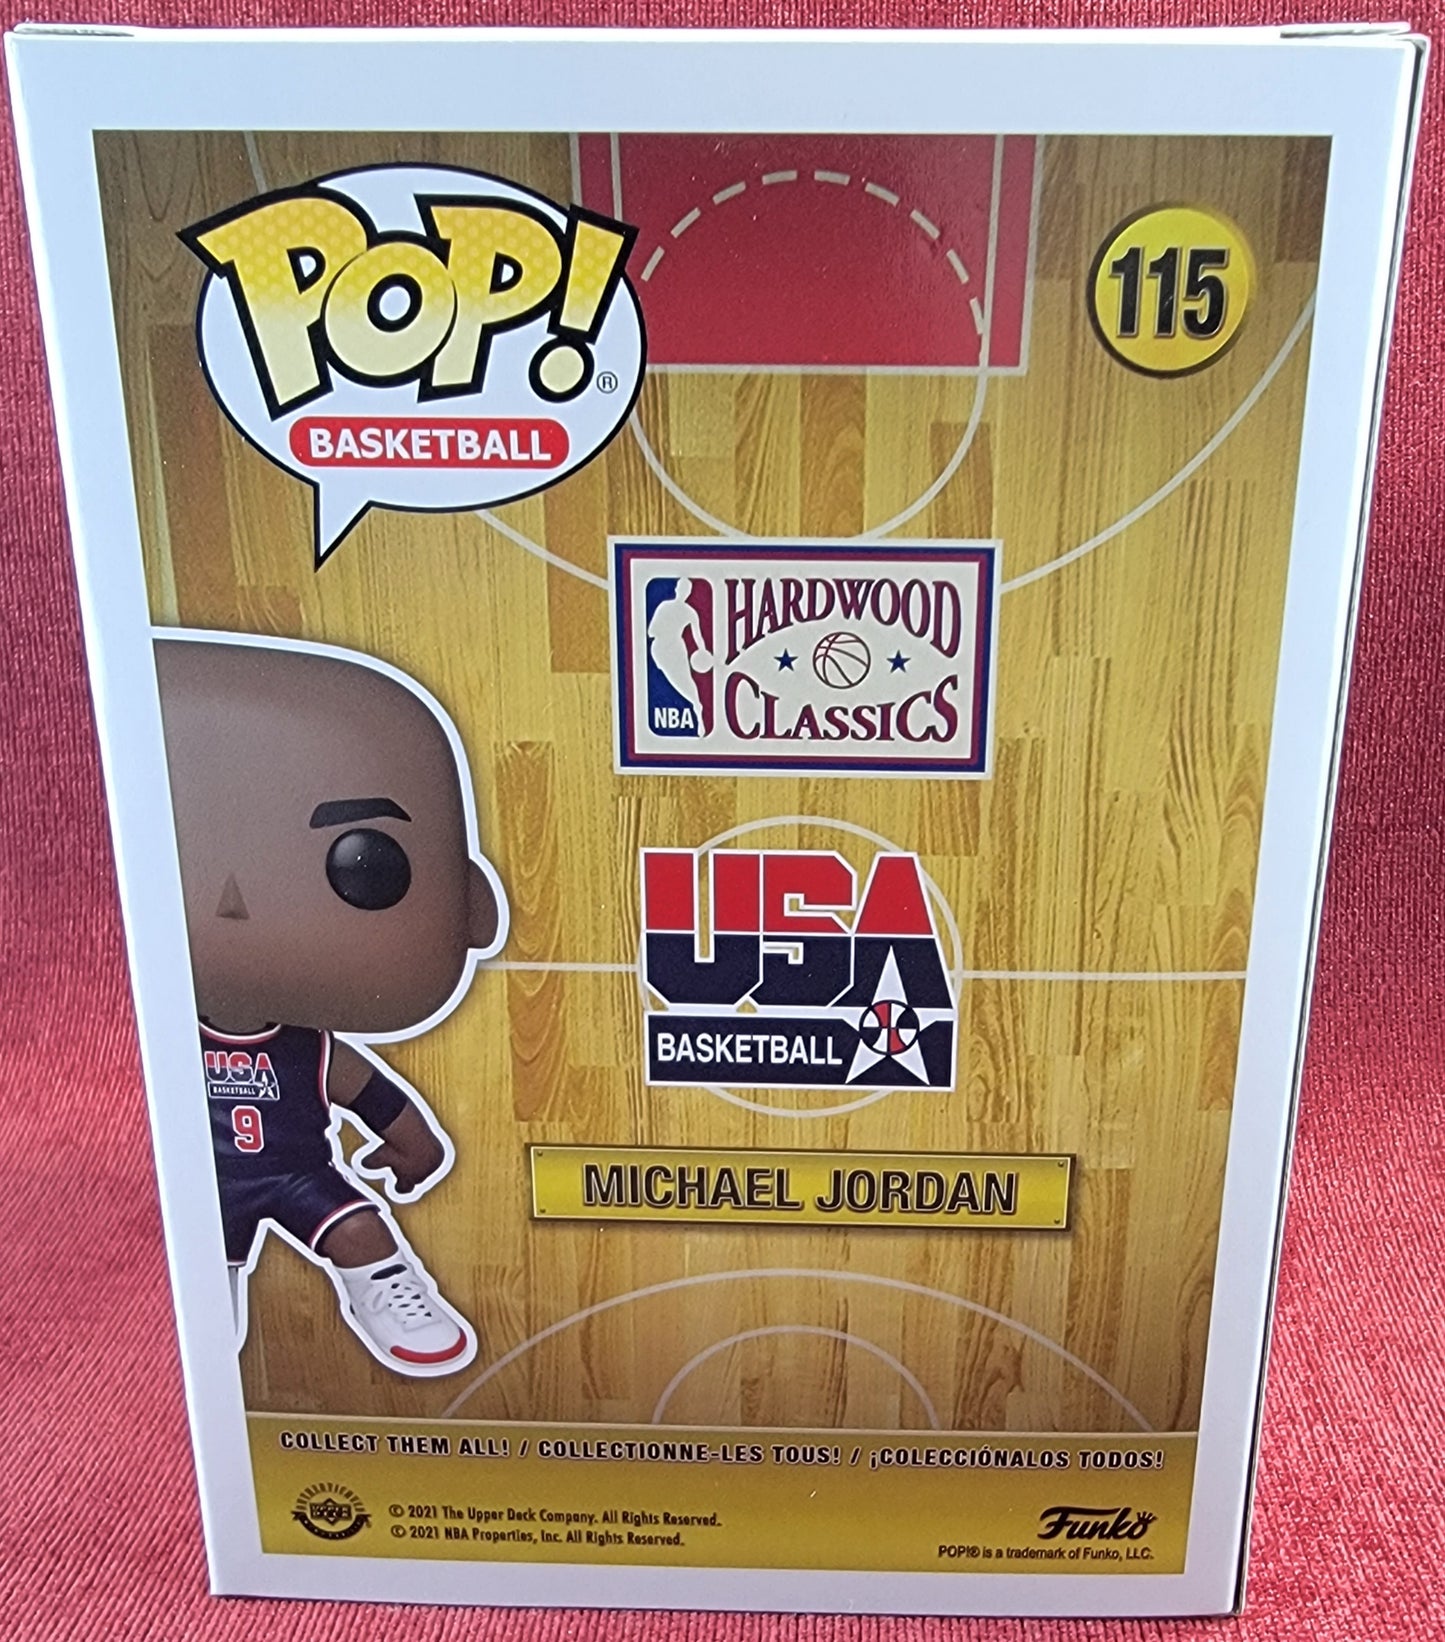 Michael Jordan foot locker exclusive funko # 115 (nib)
With pop protector